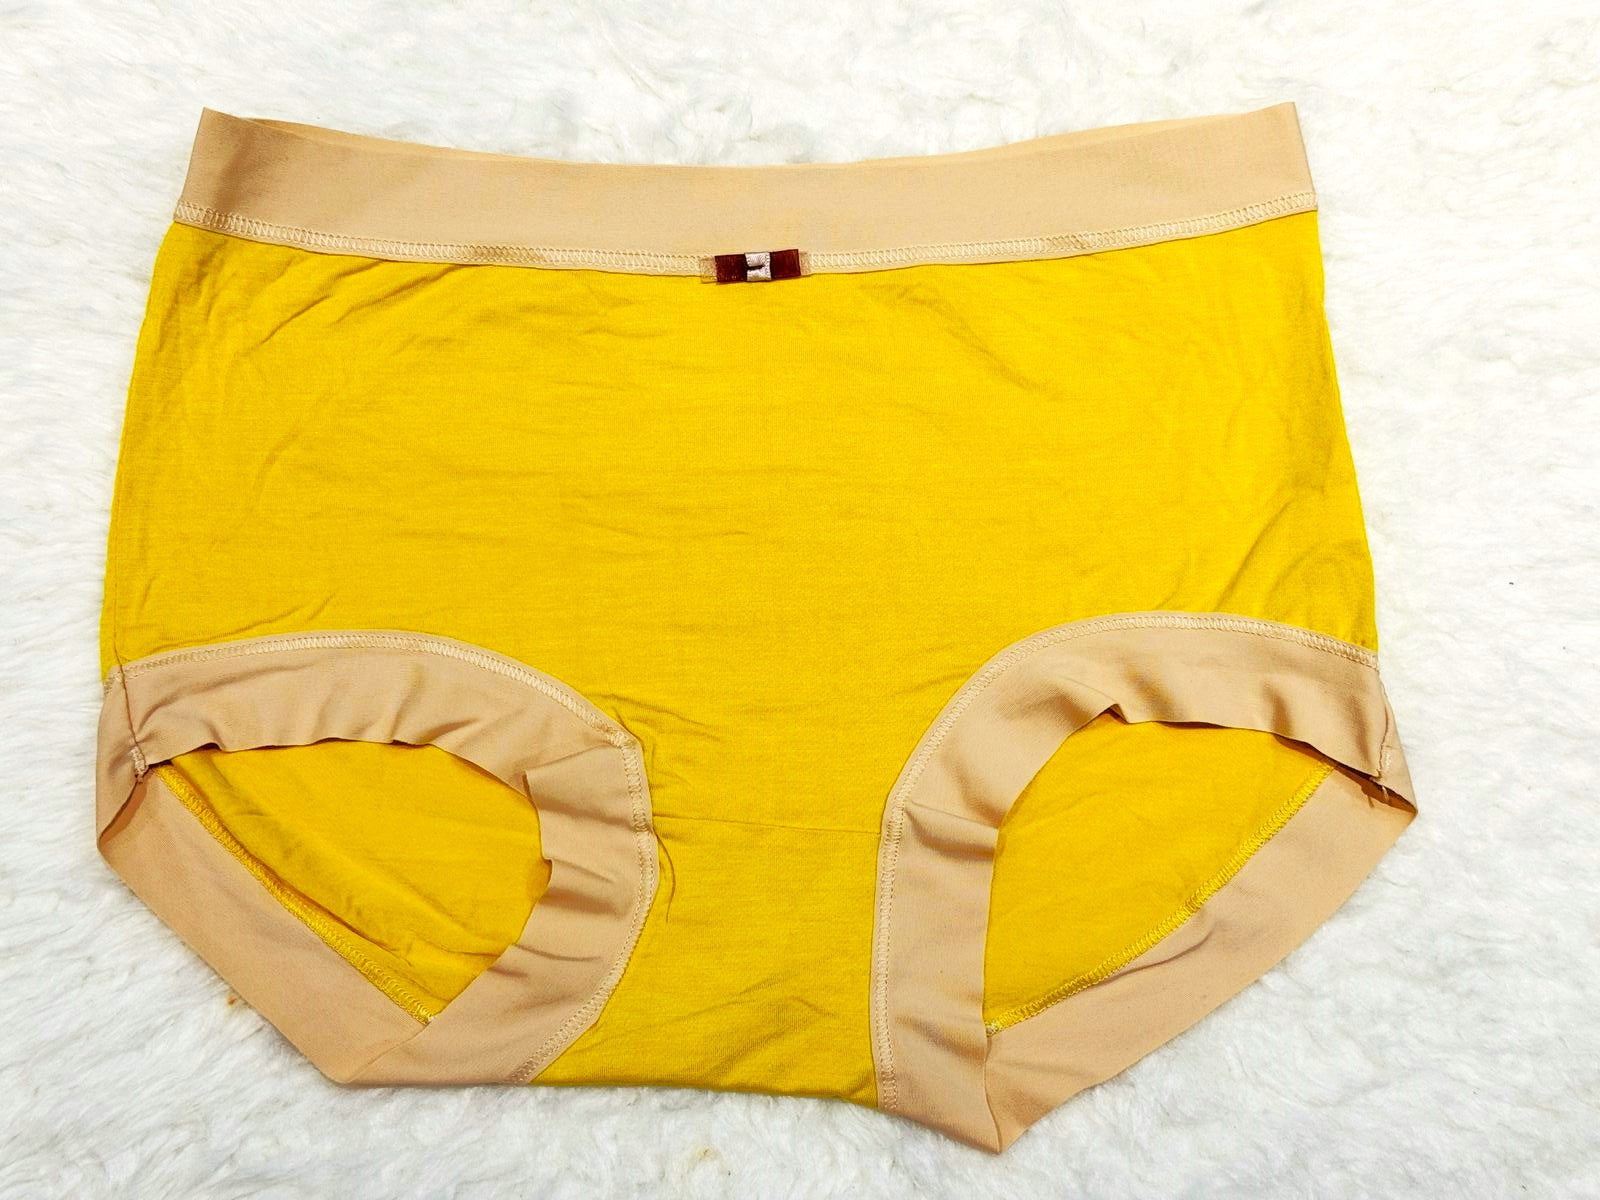 Sajiero Plus Size Plain Brief Cotton Panty best quality undergarment for ladies price in pakistan online